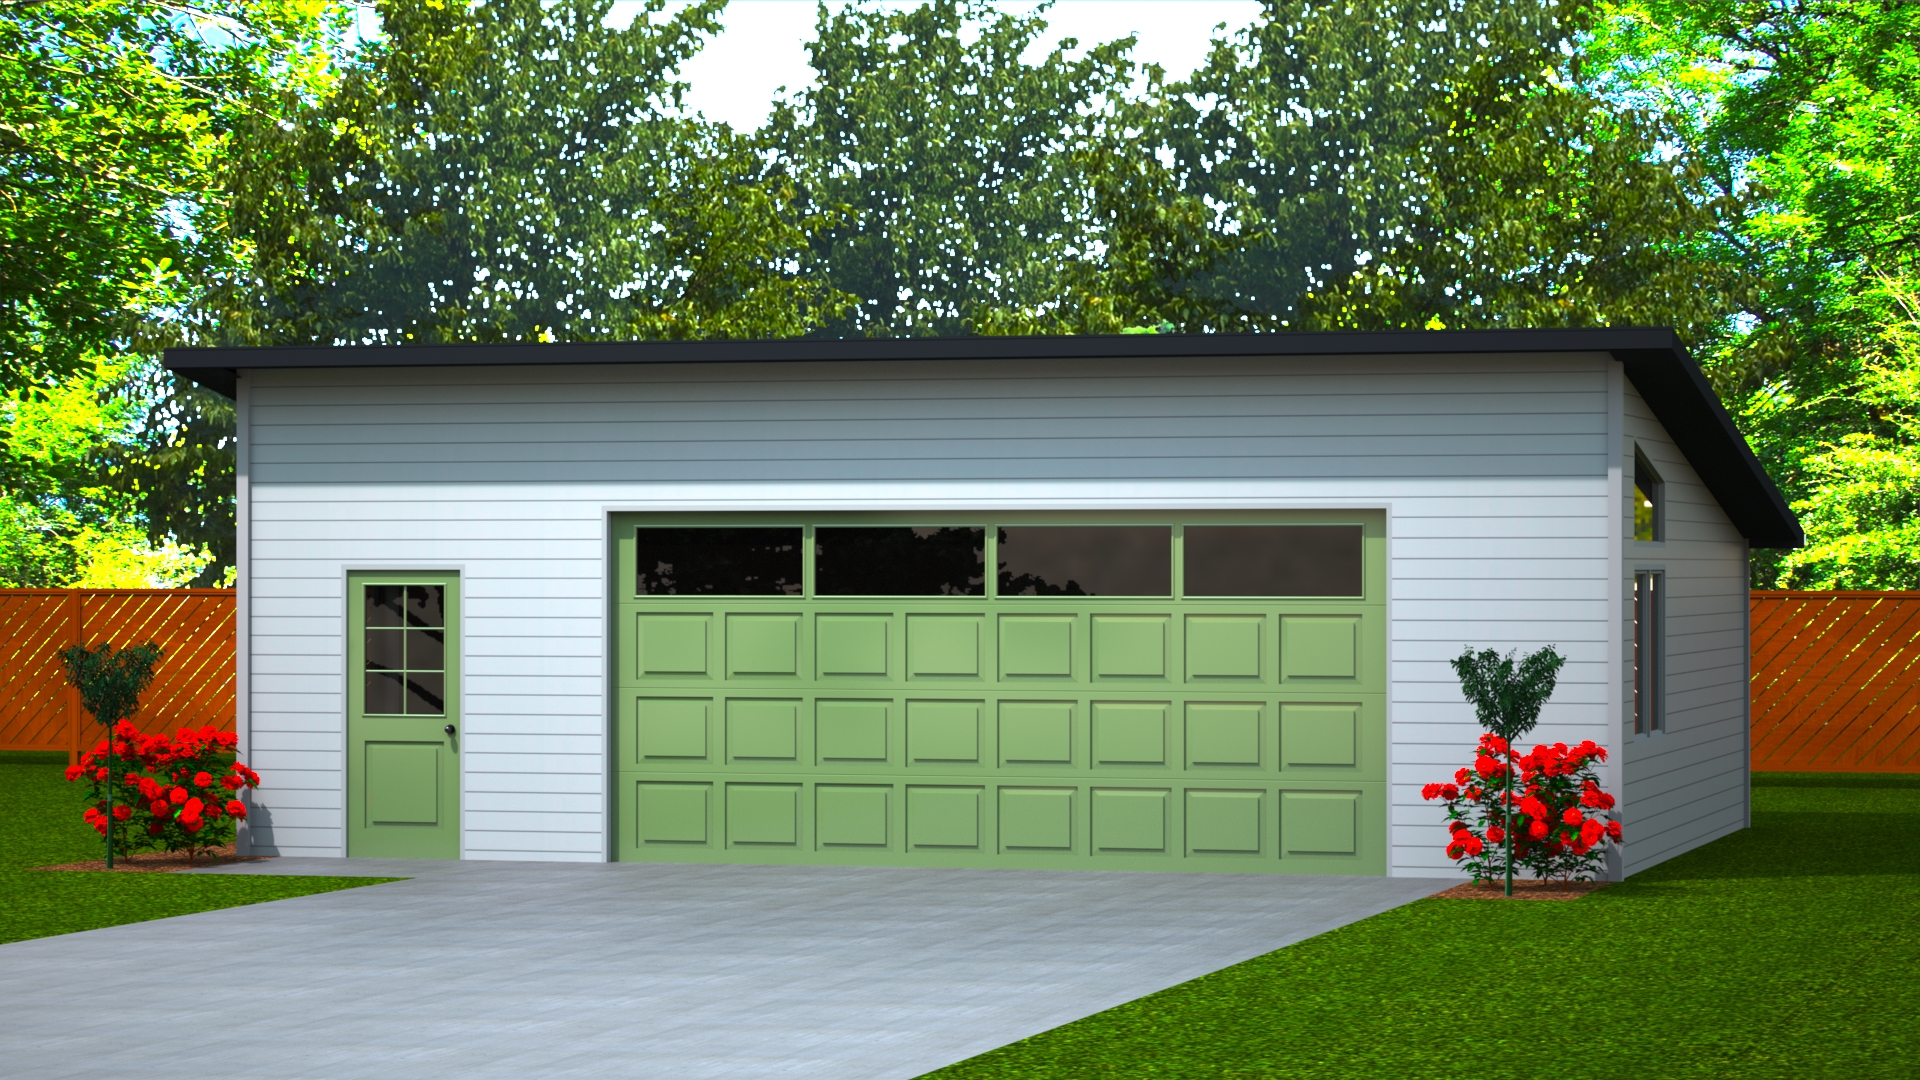 704 sq.ft. timber mart 2 car garage exterior render